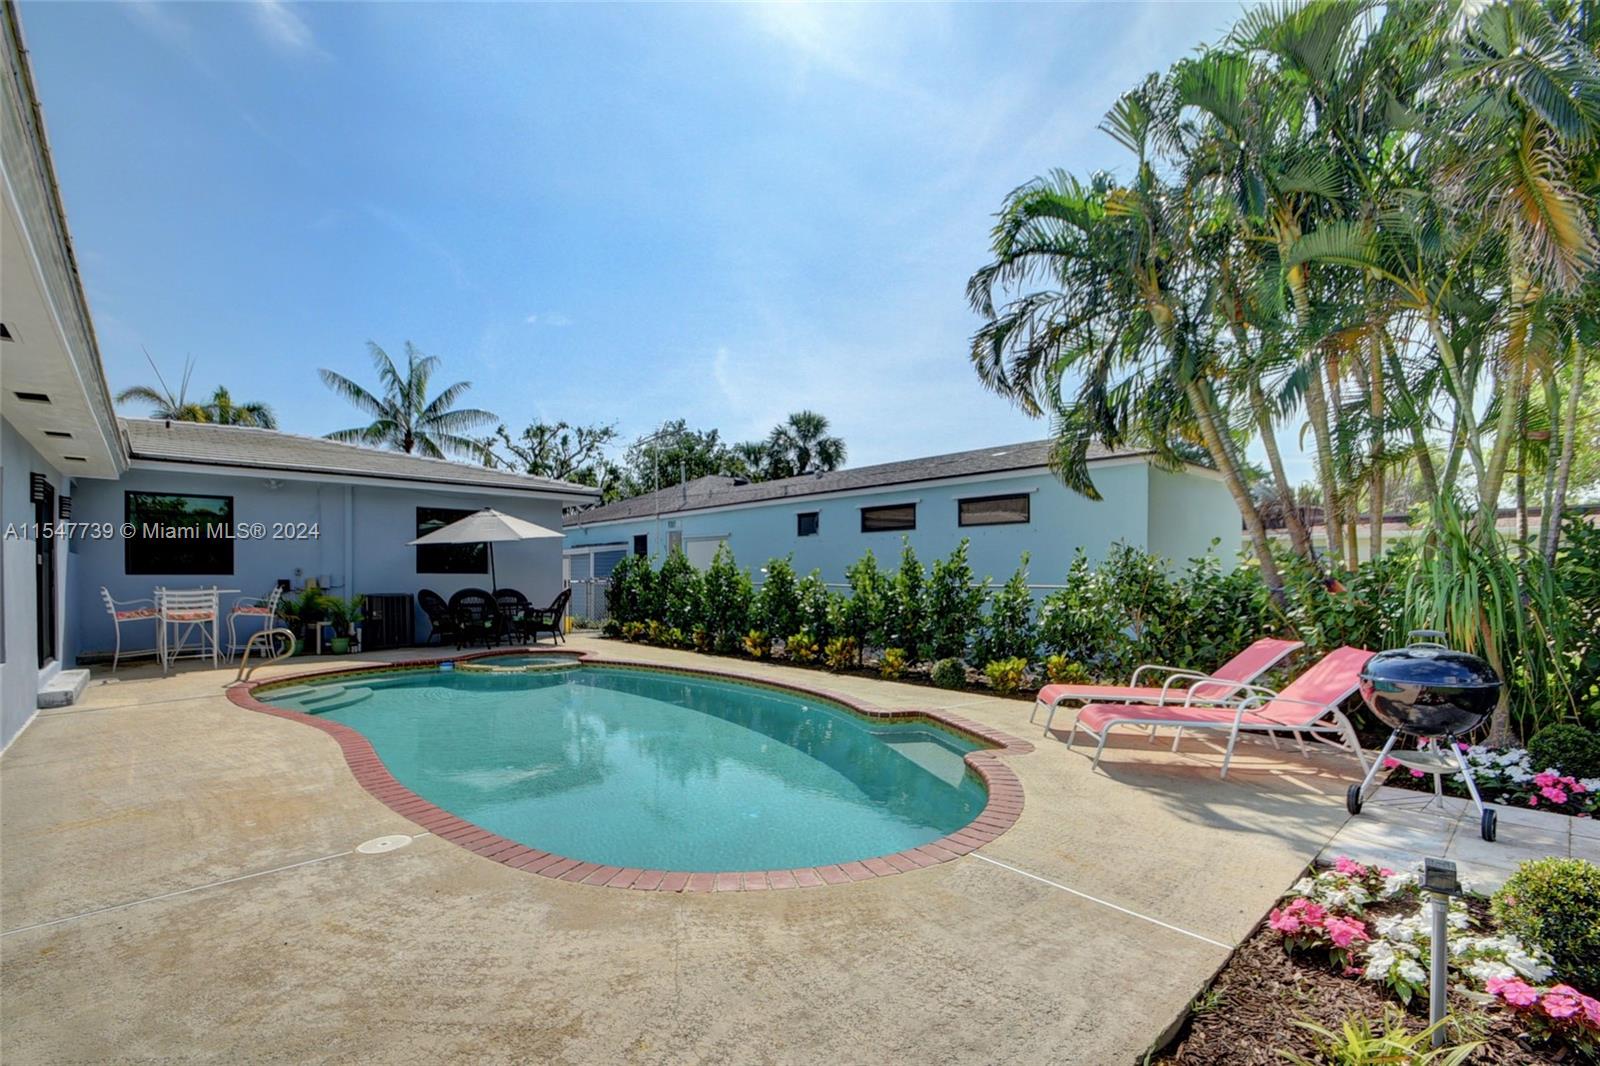 Rental Property at 1023 S Palmway, Lake Worth, Palm Beach County, Florida - Bedrooms: 4 
Bathrooms: 3  - $6,500 MO.